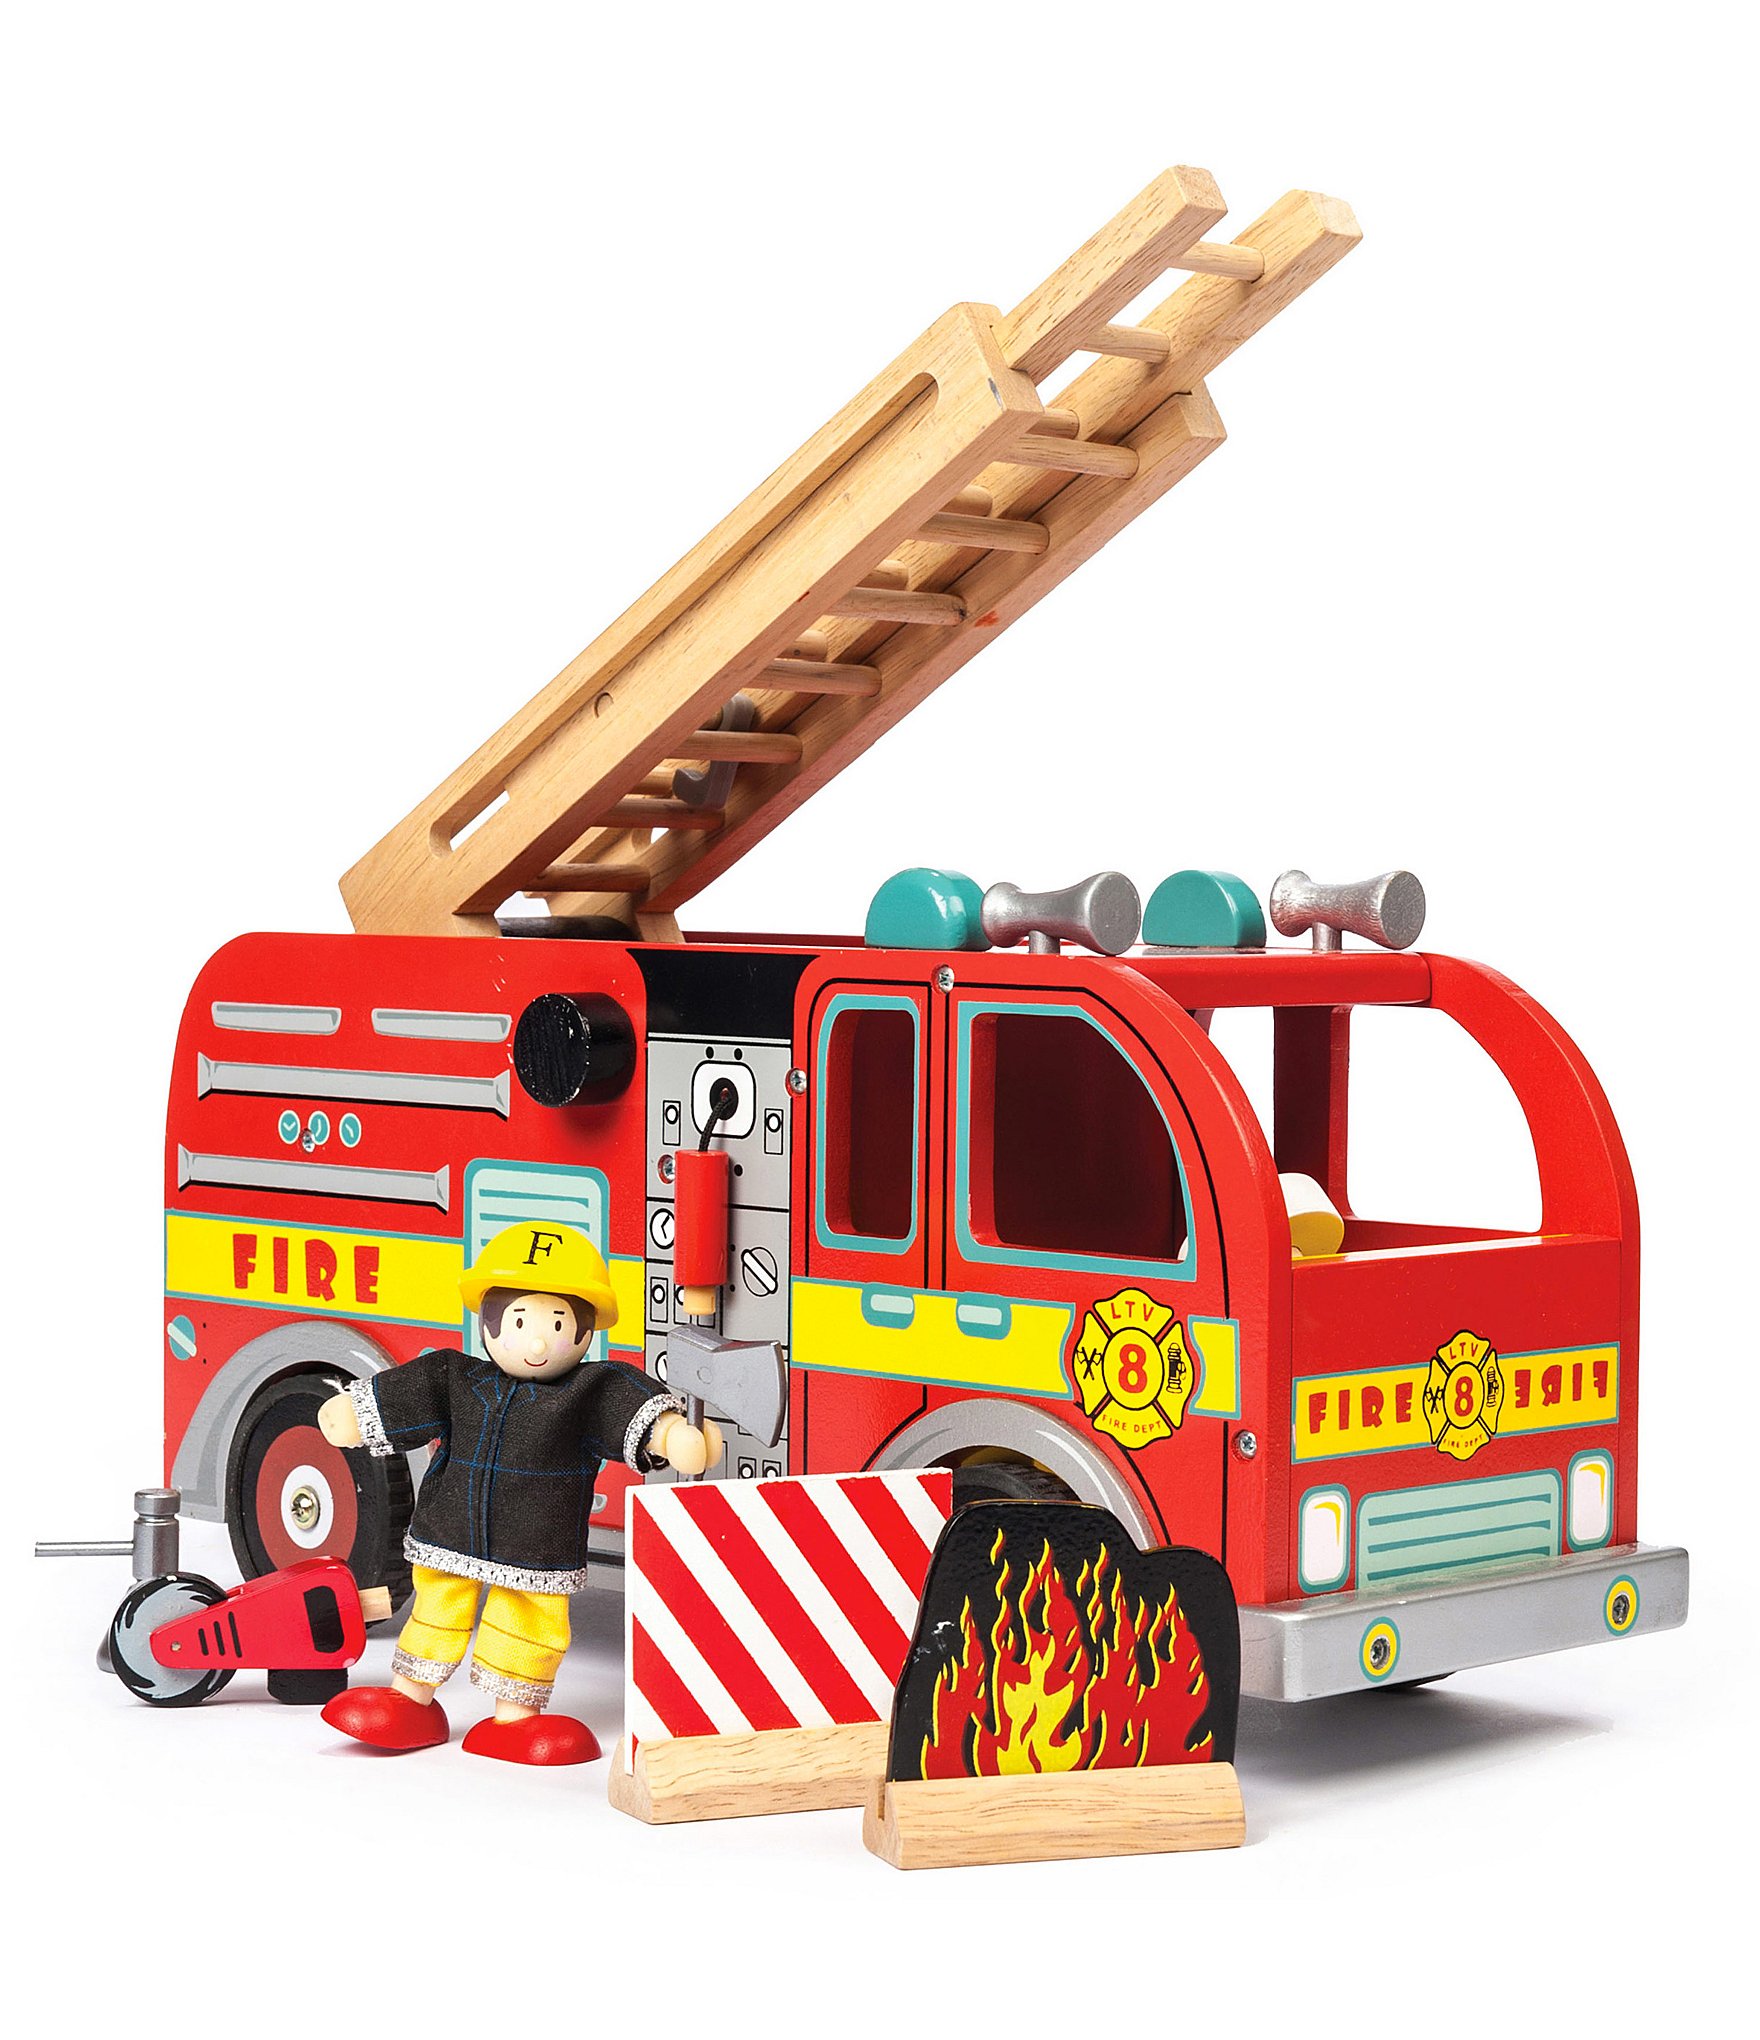 Le Toy Van Honeybake Wooden Fire Engine 